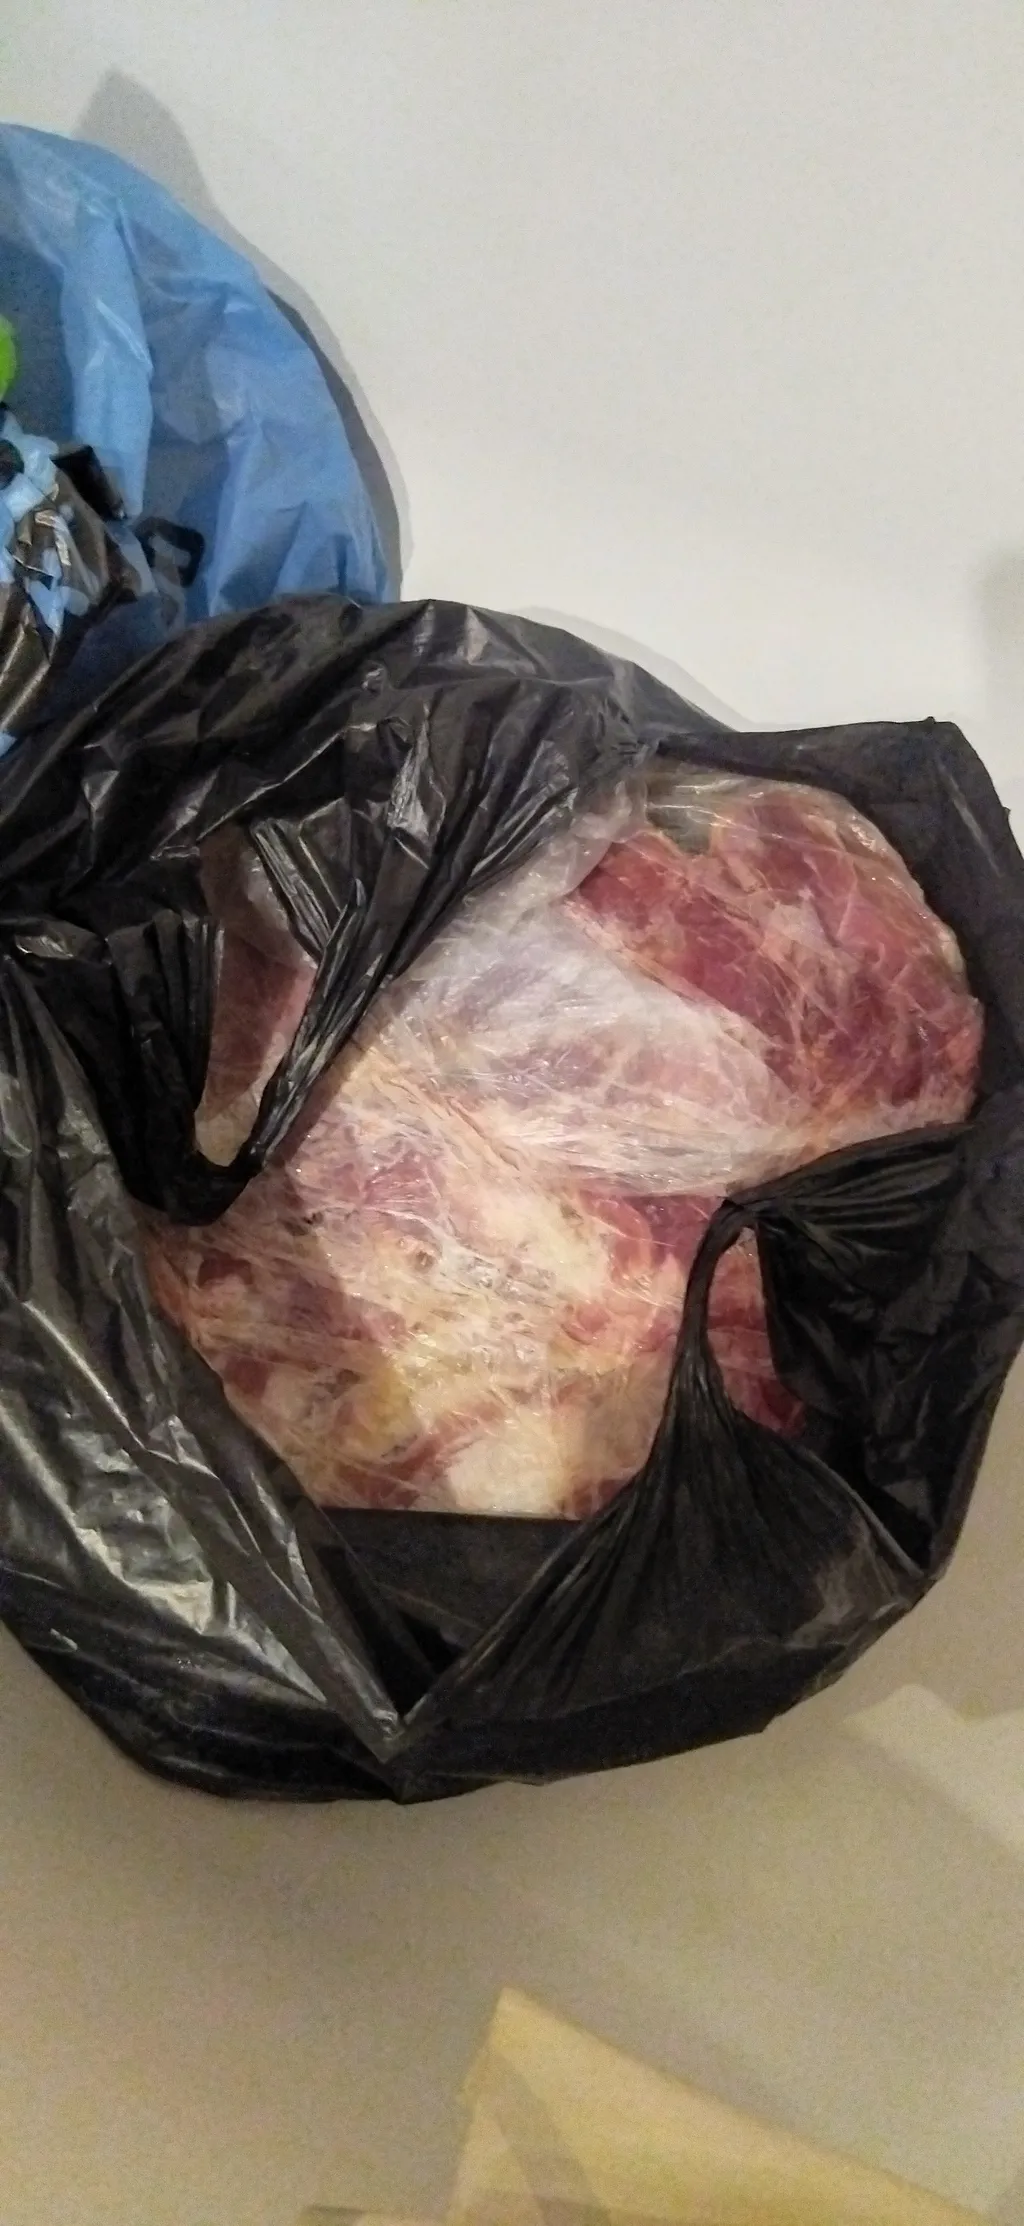 мясо курица свинина в Кызыле